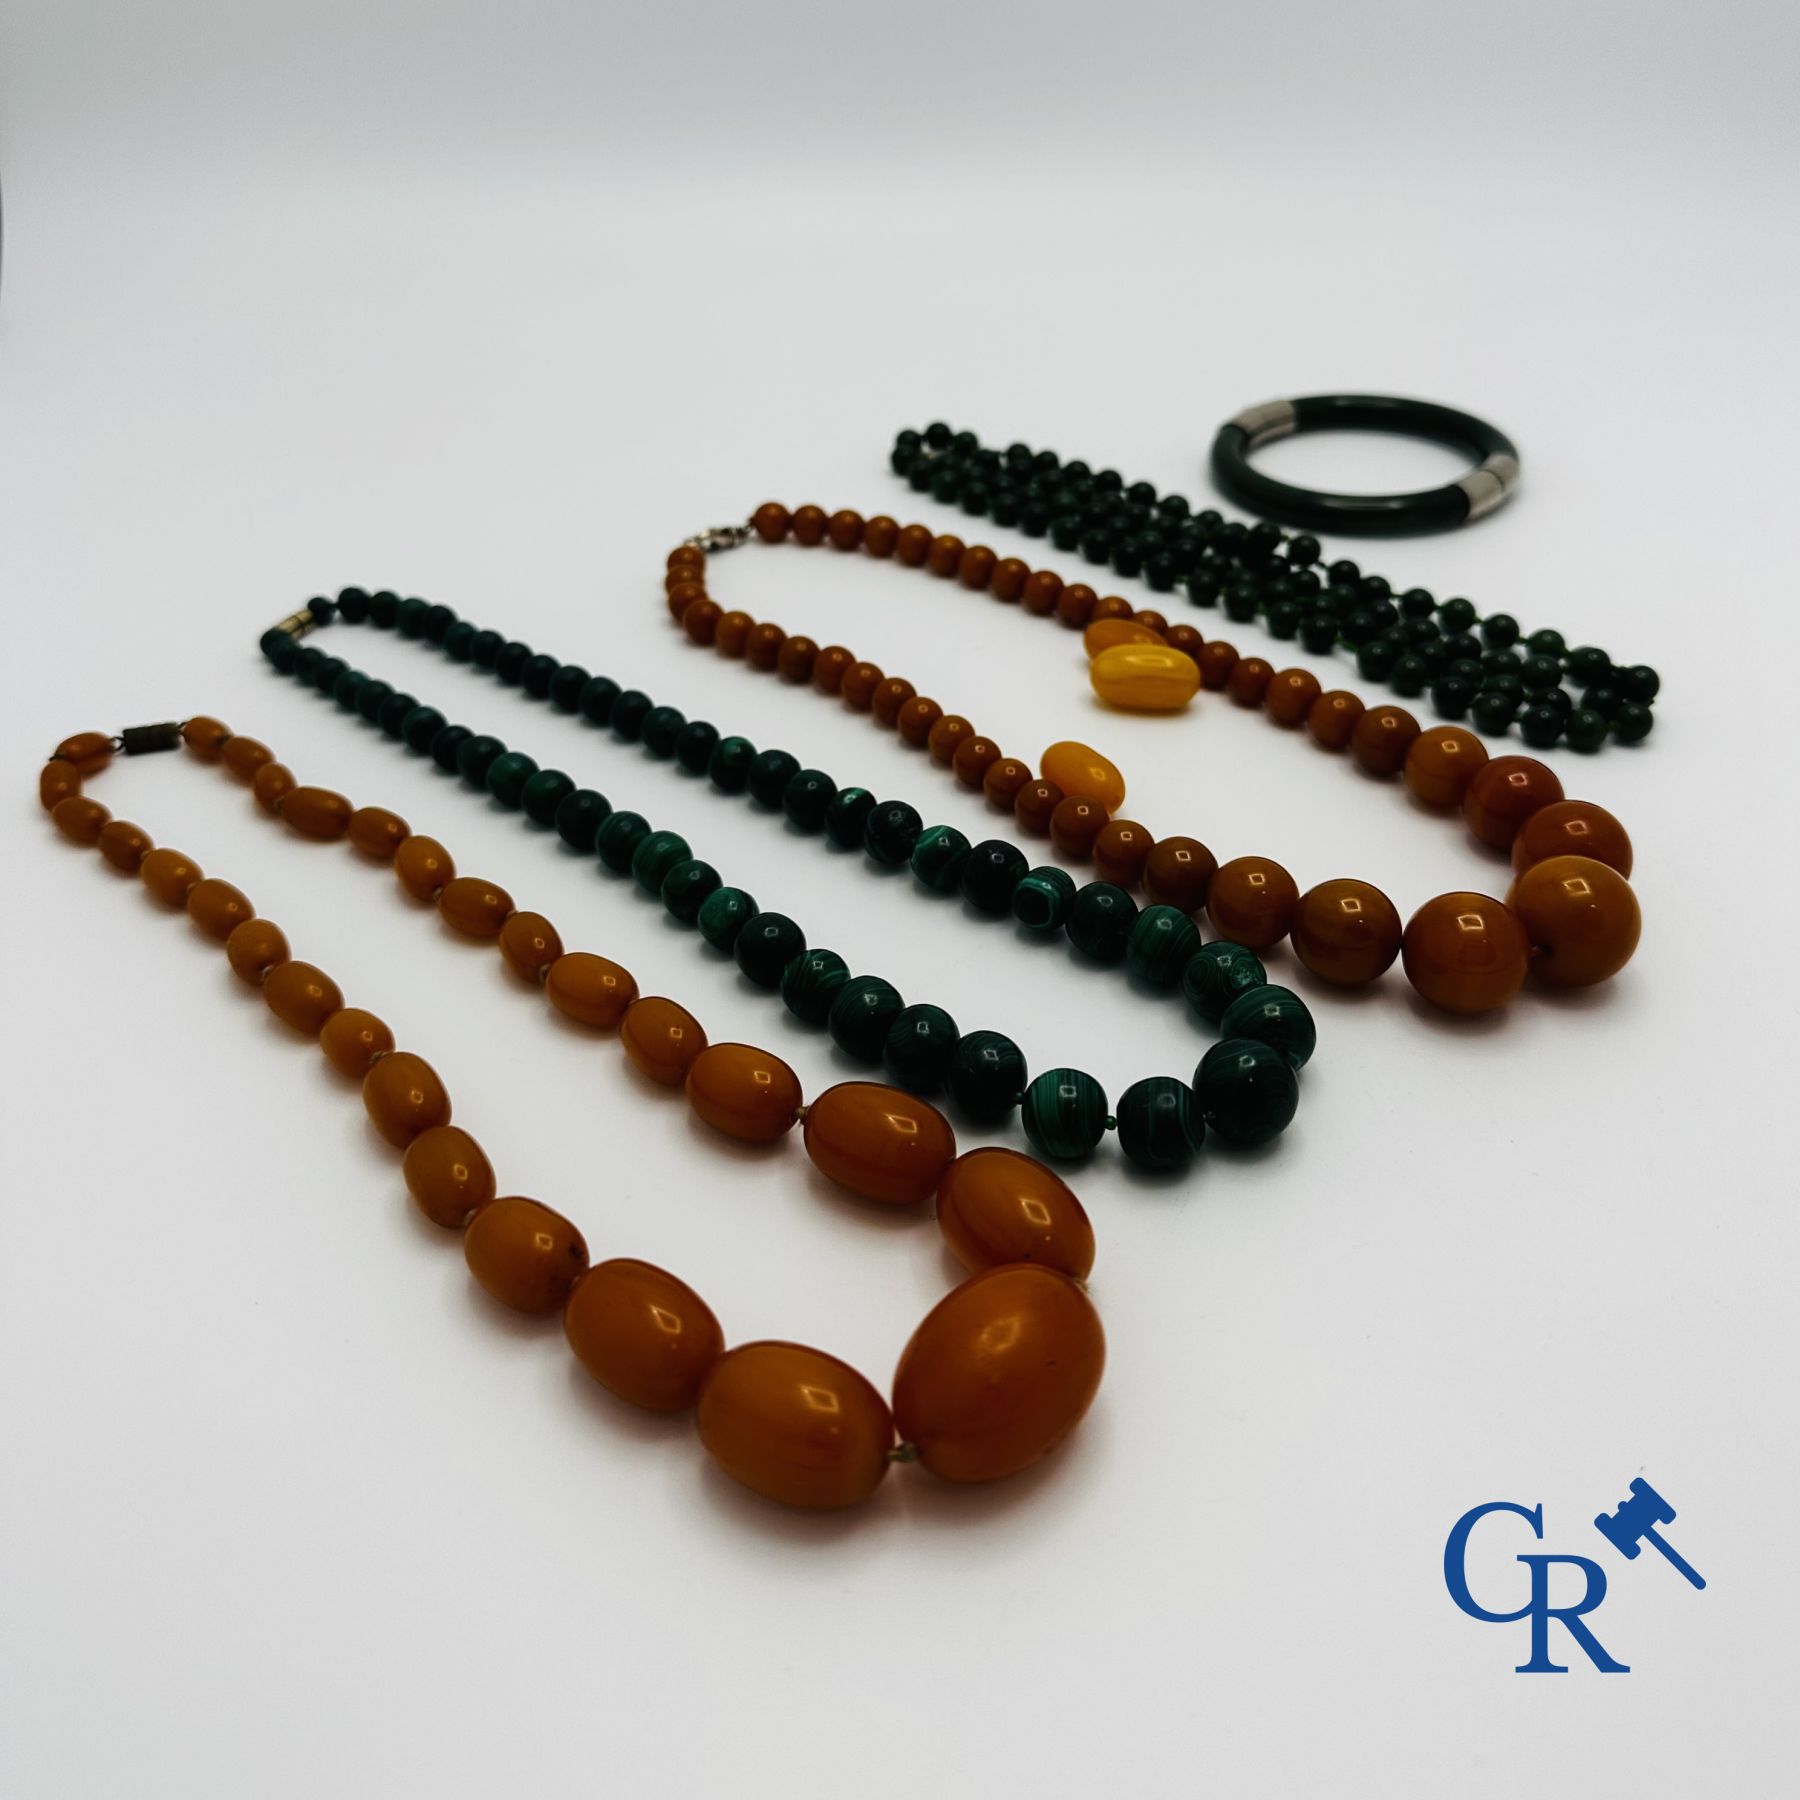 Jewellery: Lot consisting of jewellery made of jade, malachite and imitation amber.